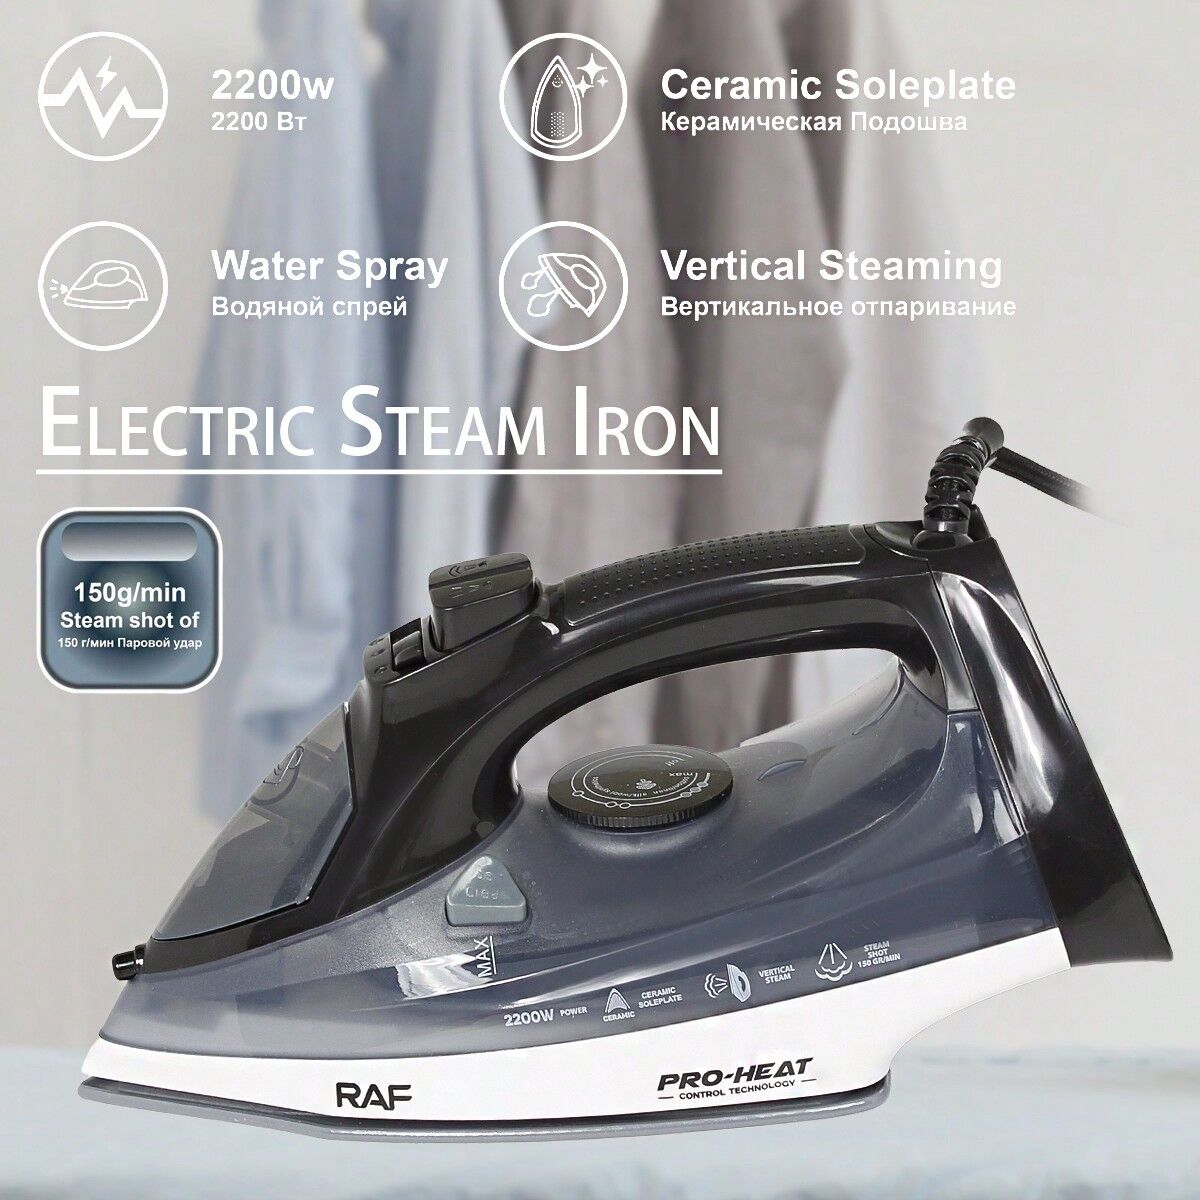 SHEIN 1pcs Eu Plug Handheld Multi-function Adjustable Spray Dry & Wet Use Steam Iron, For Home/travel/business Trip Navy Blue EU Plug